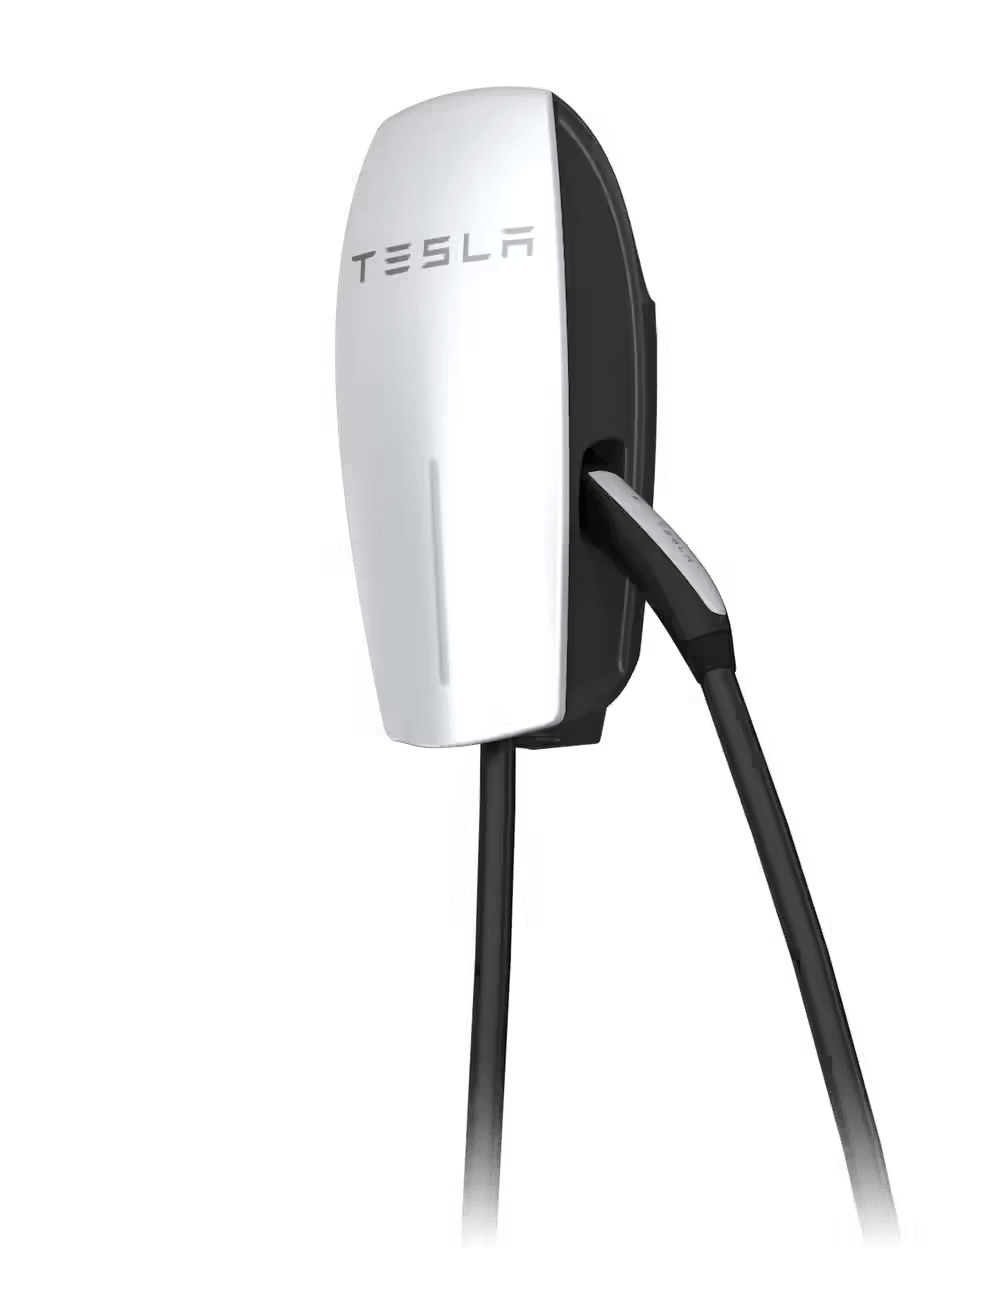 Greentech offers Tesla EV charger installation